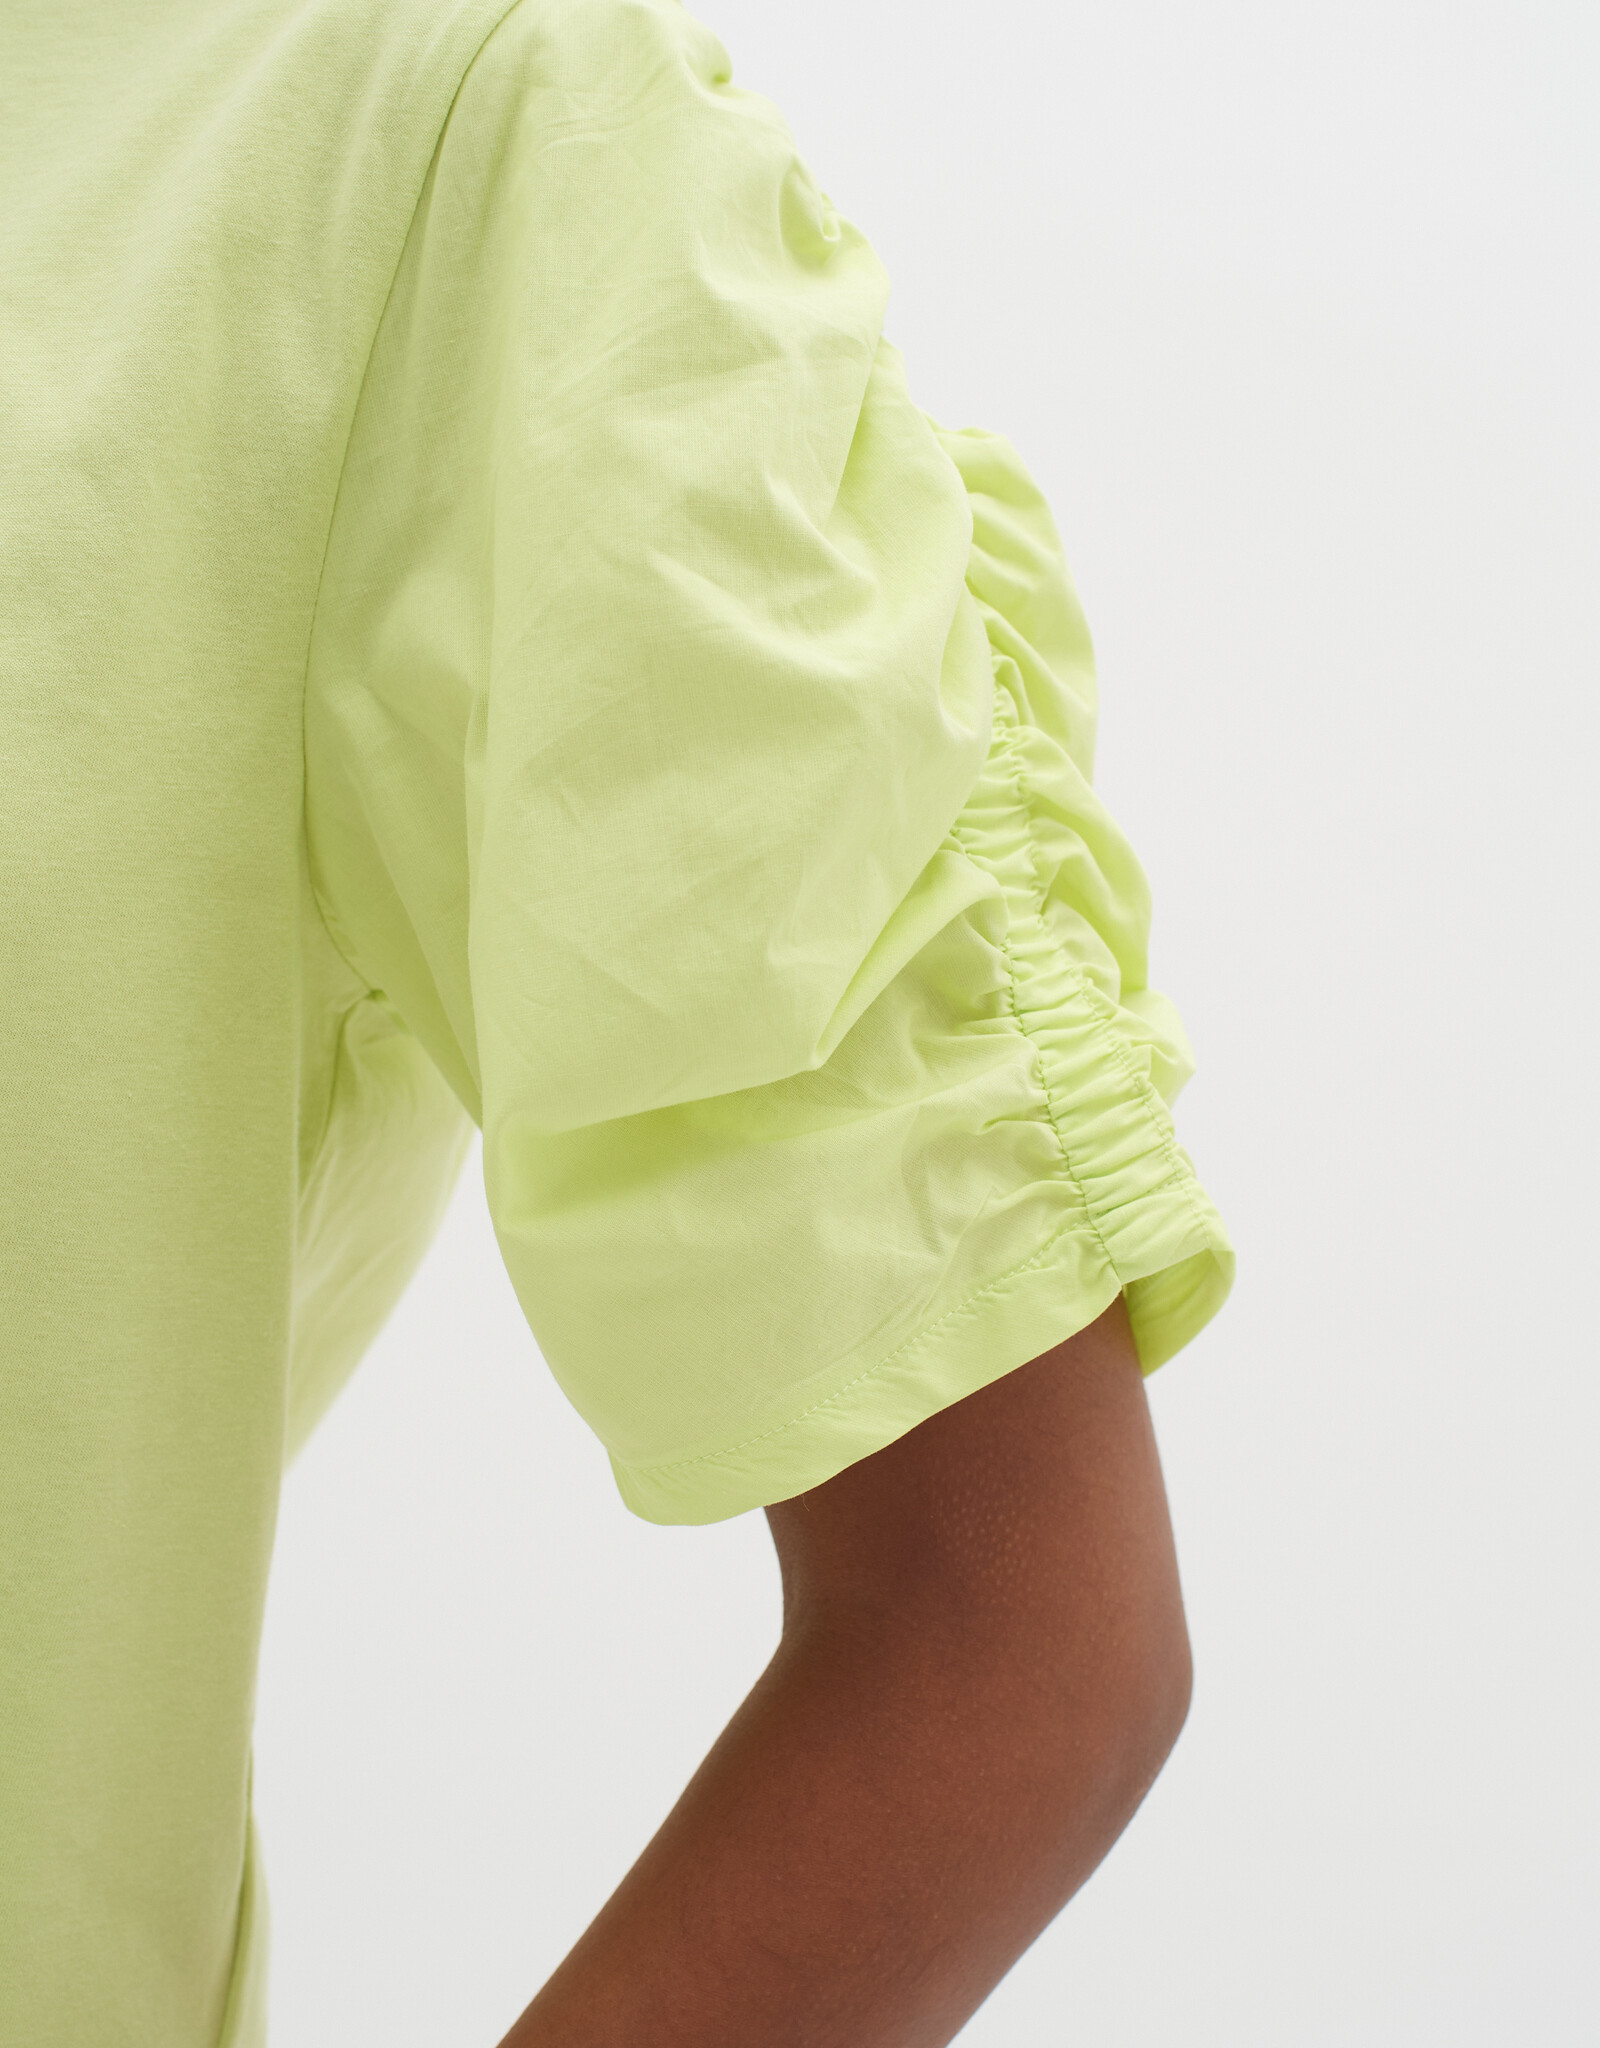 InWear Payana Woven Trim T-Shirt Lime Sorbet